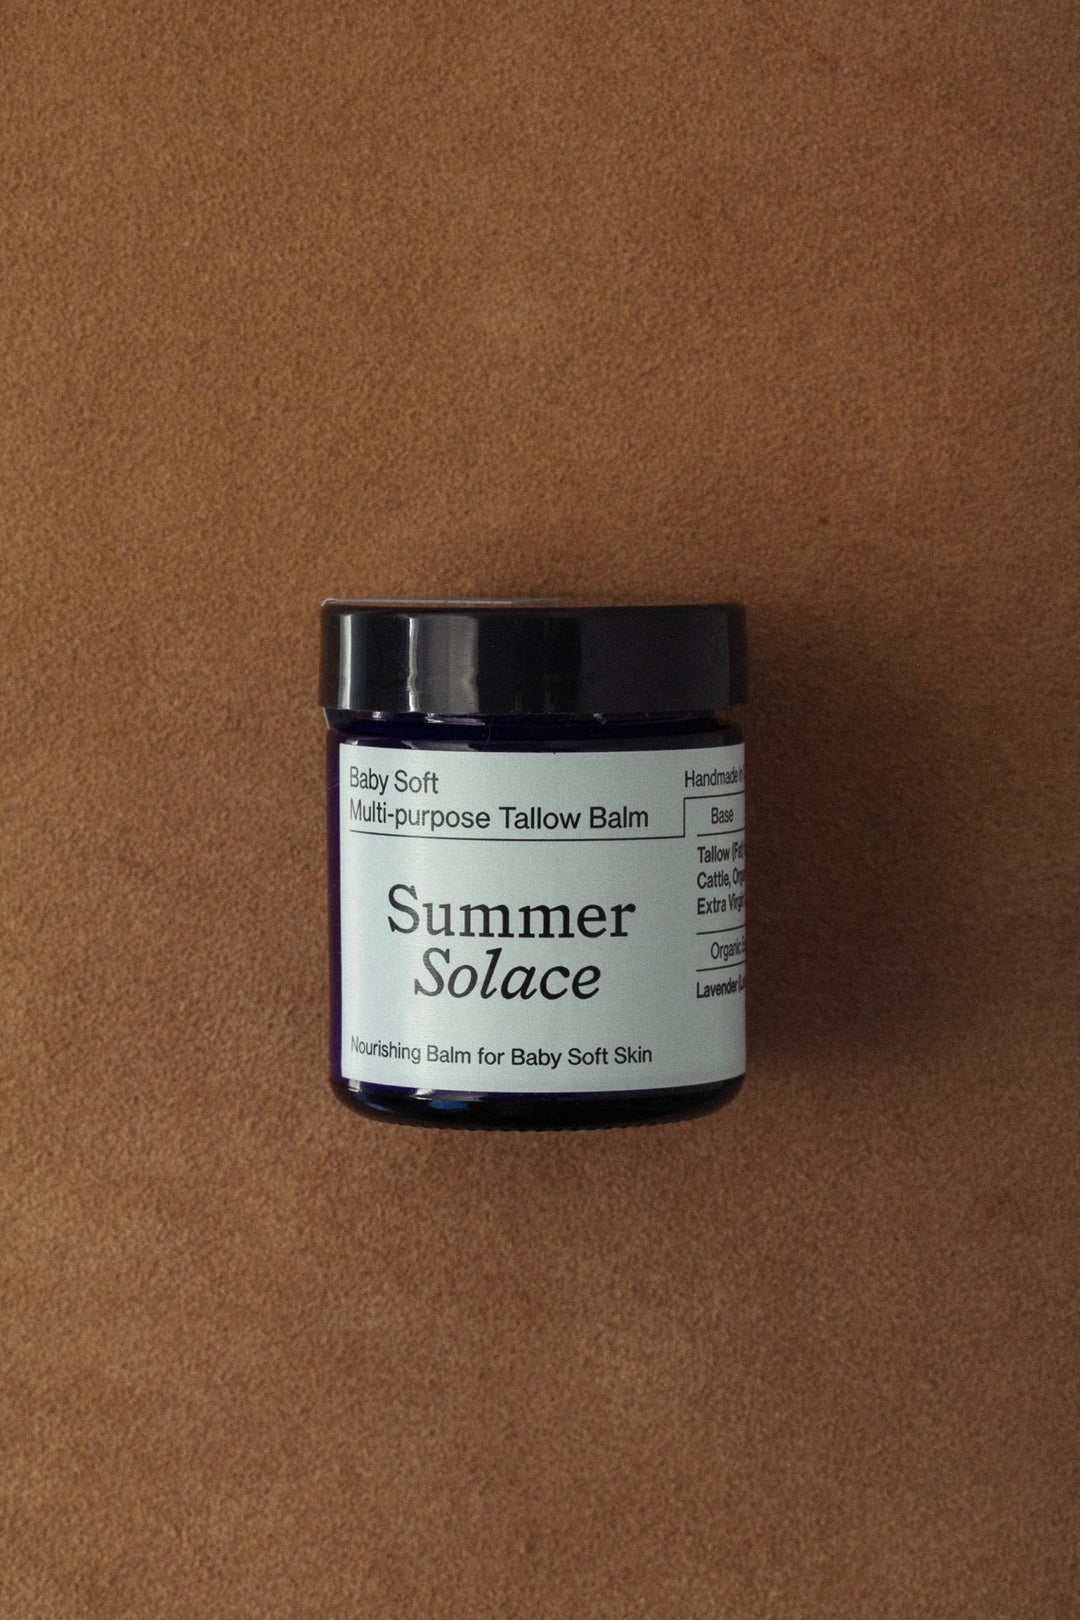 Summer Solace Tallow - Baby Soft Family Balm - Regenerative Tallow® + Pastured Leaf Lard - Balm